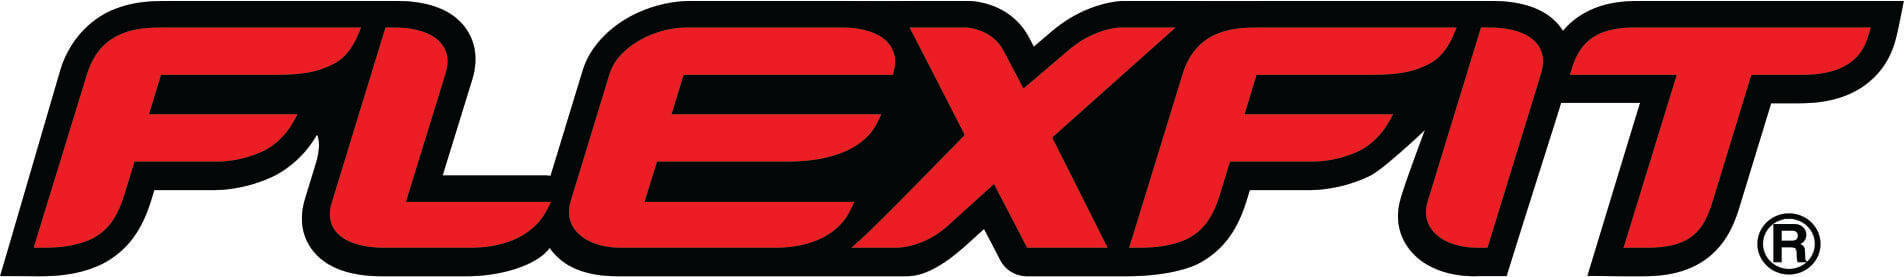 flexfit-logo